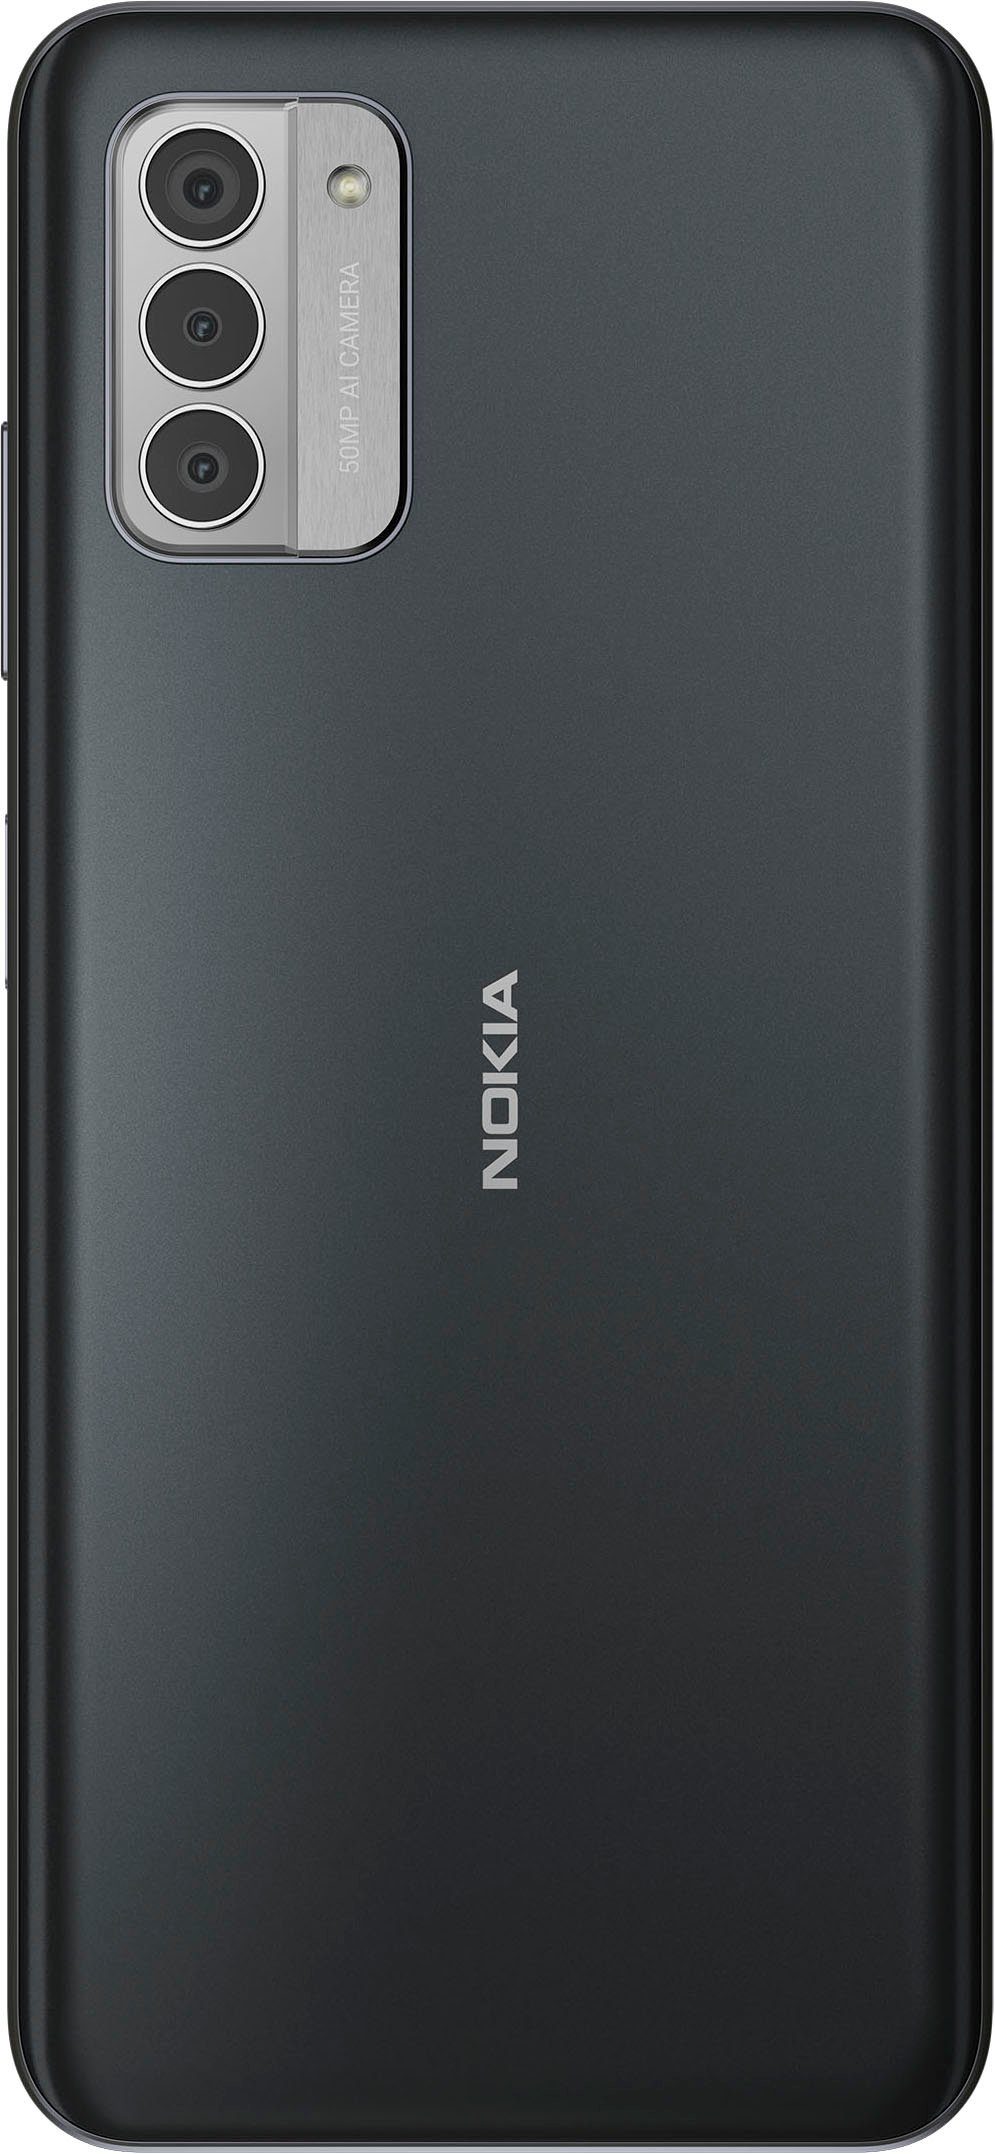 Nokia 128 50 GB Kamera) Speicherplatz, Smartphone G42 (16,9 MP cm/6,65 Zoll, grau